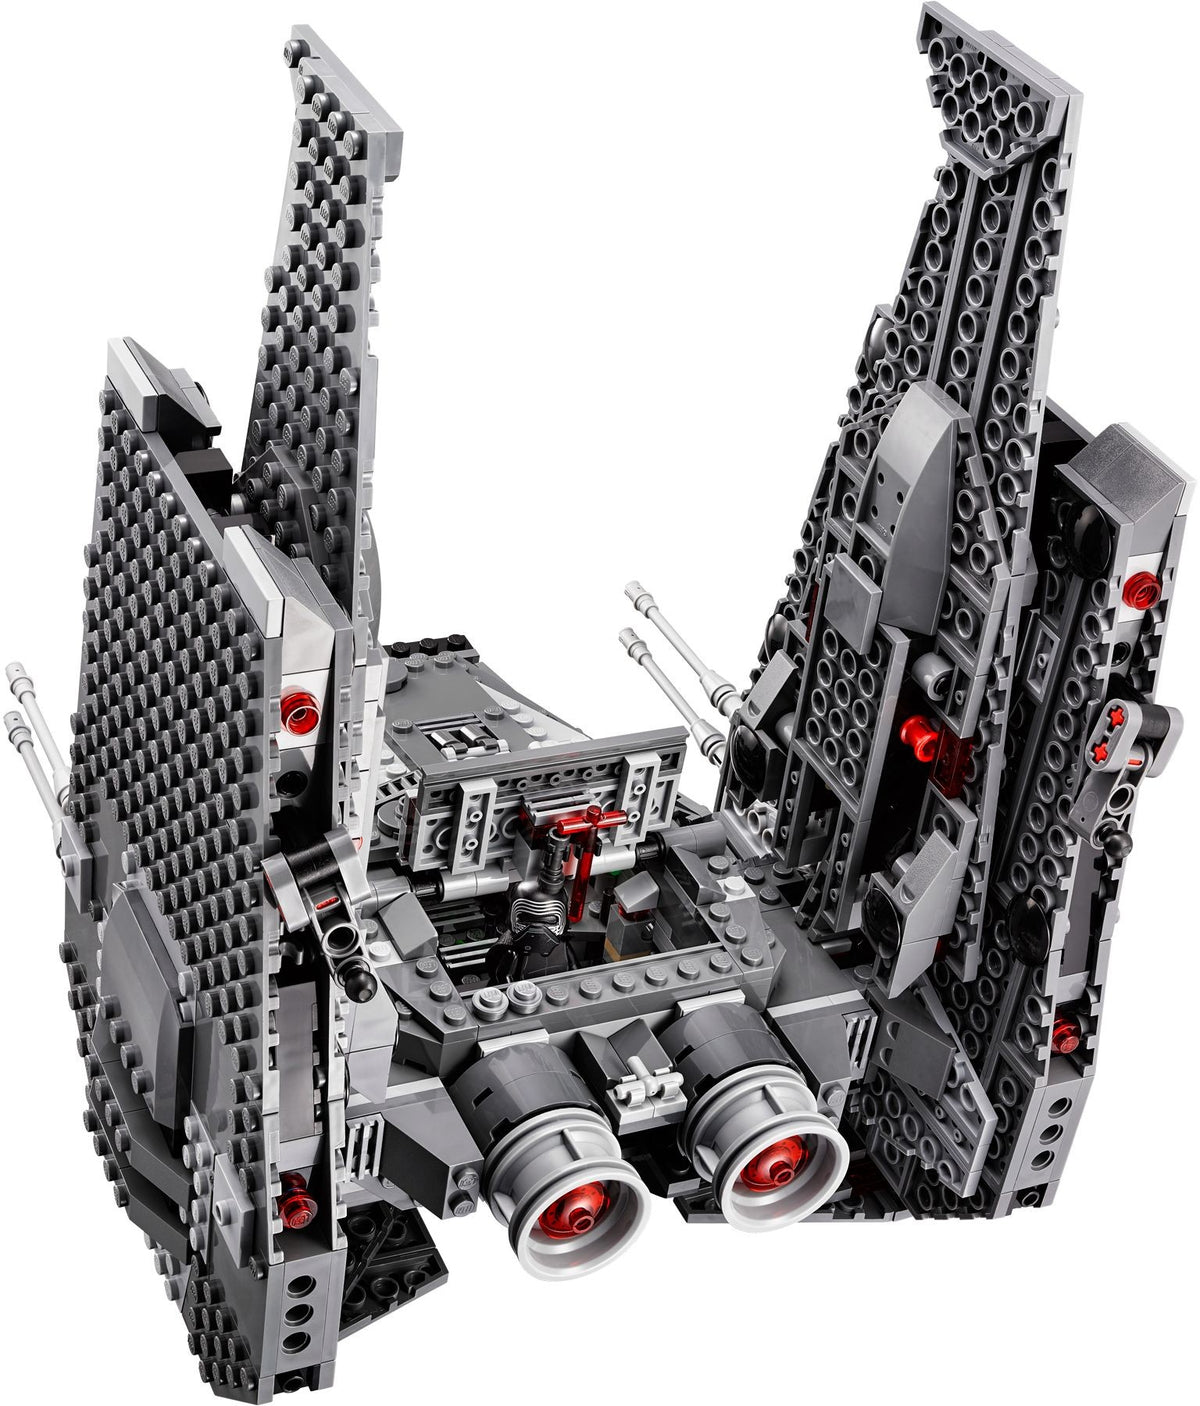 LEGO Star Wars 75104 Kylo Ren’s Command Shuttle